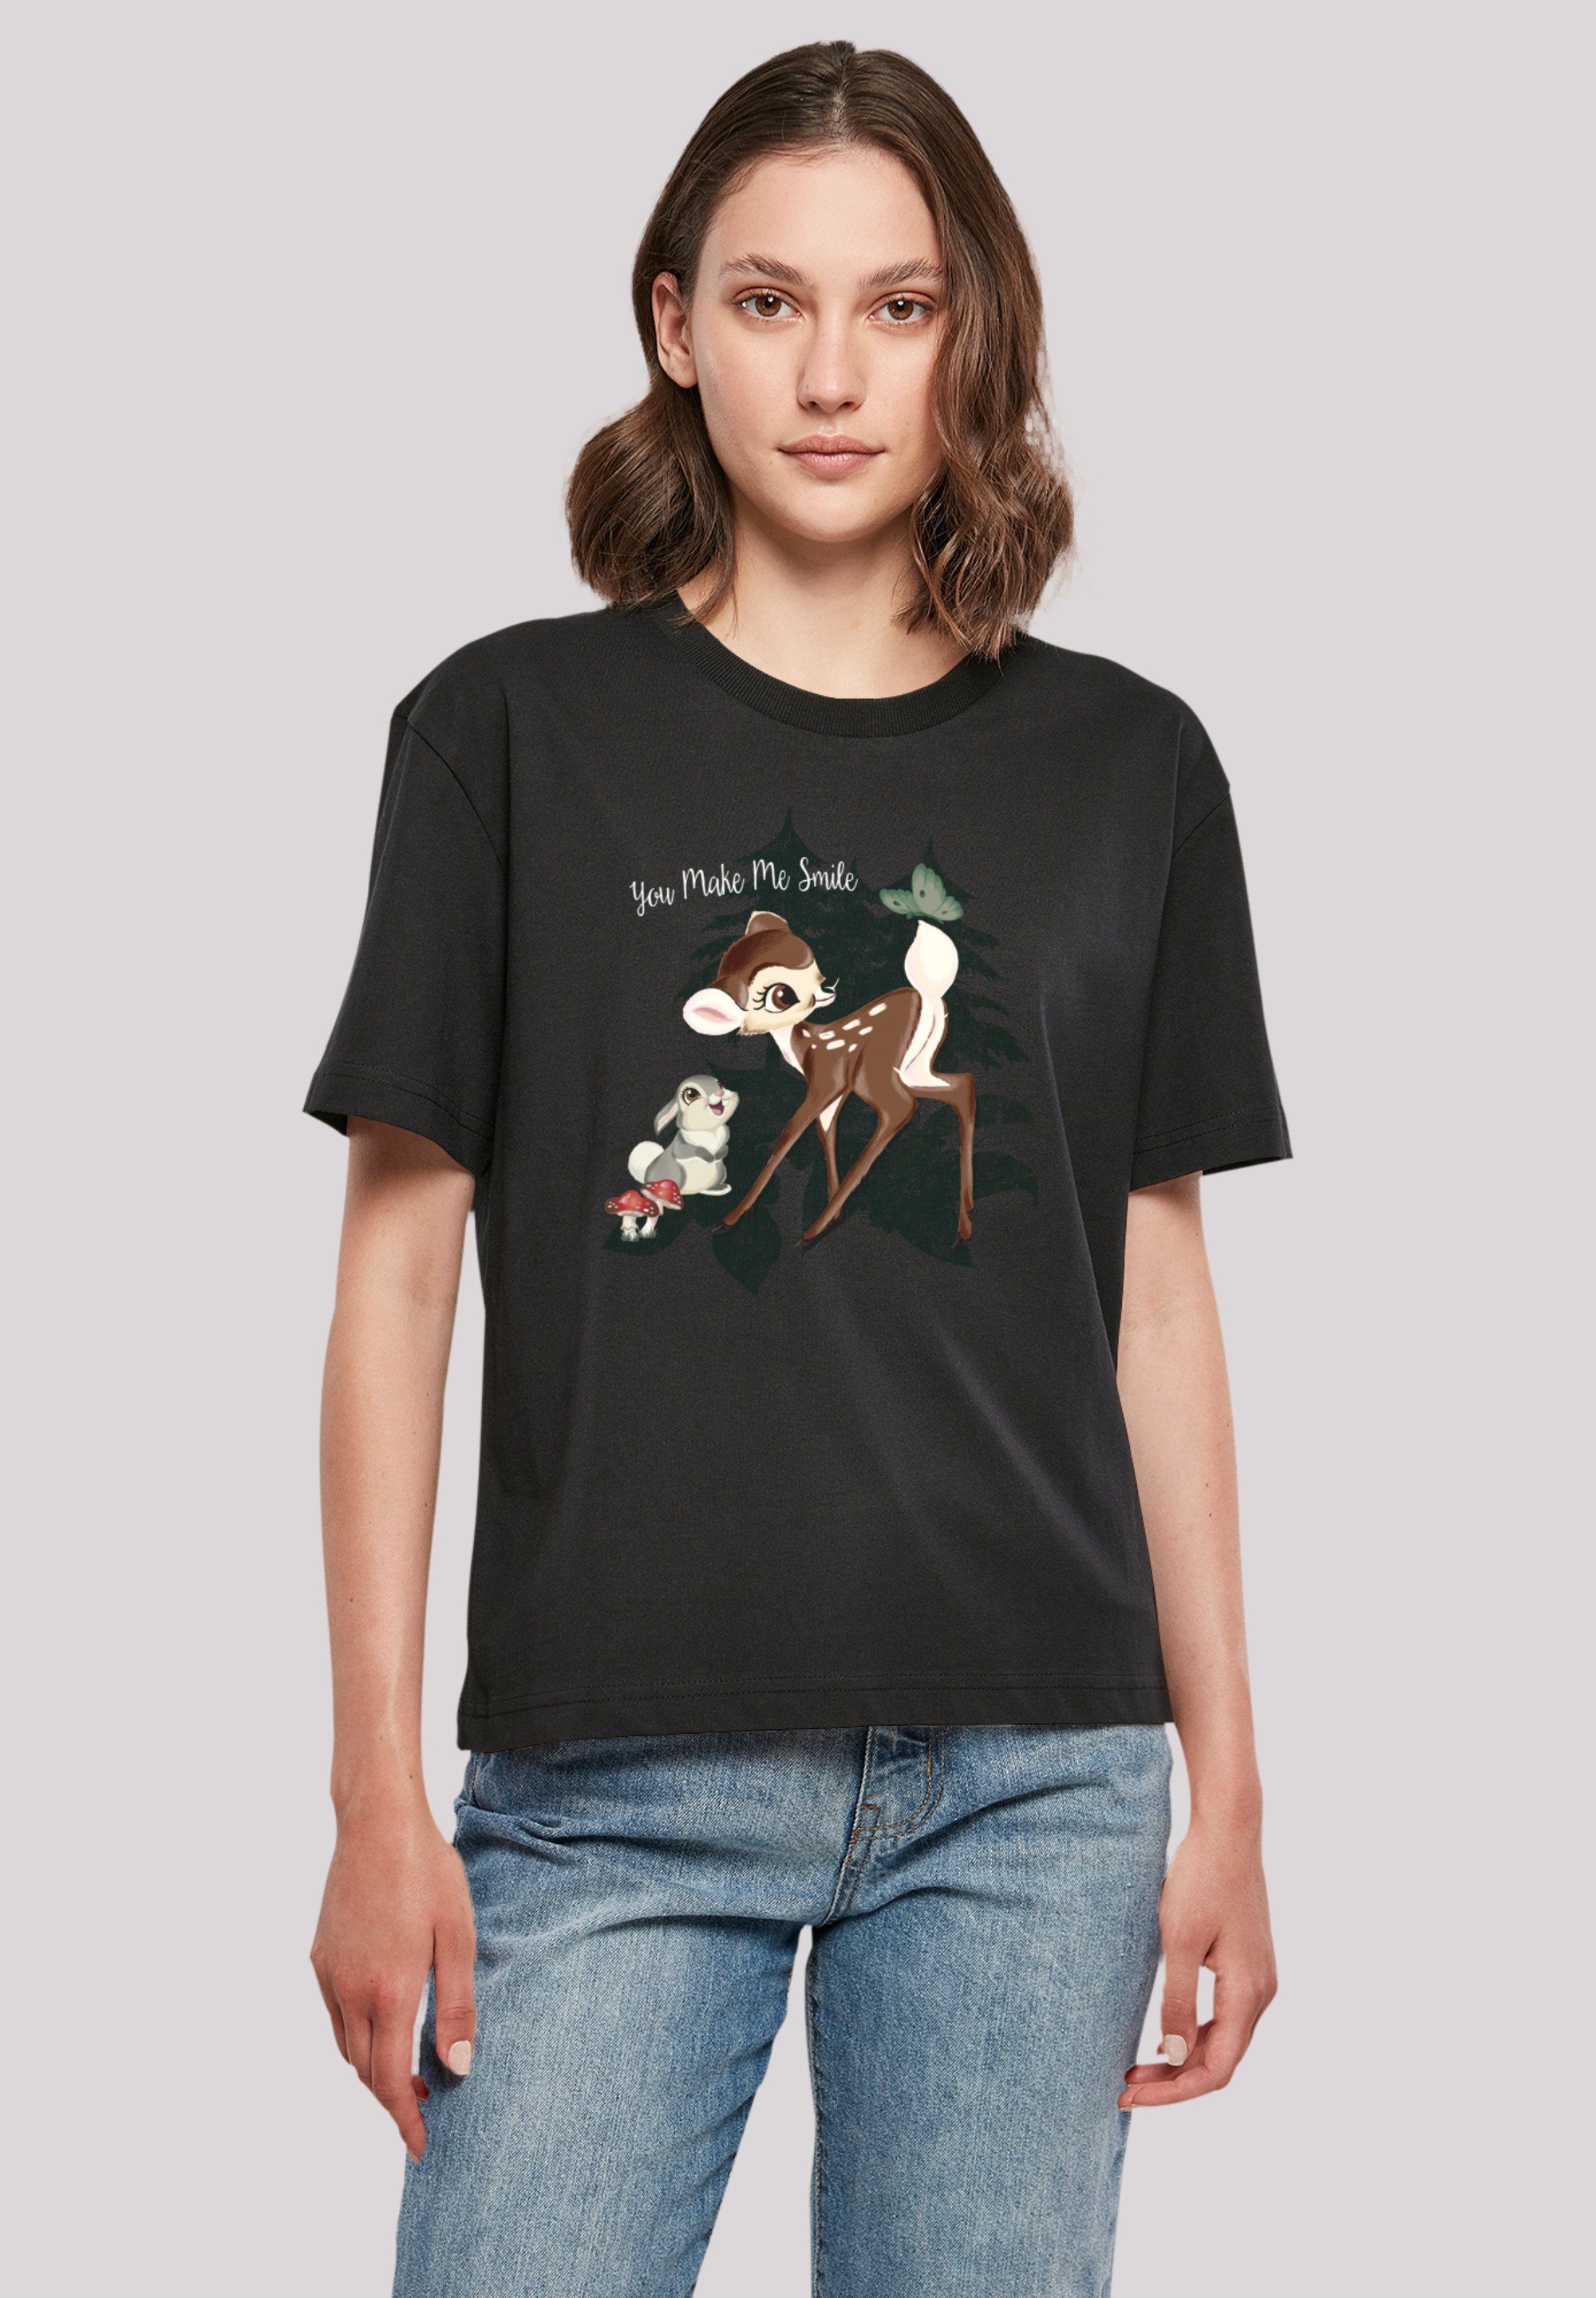 F4NT4STIC T-Shirt Disney Bambi Smile Premium Qualität, Komfortabel und  vielseitig kombinierbar | T-Shirts